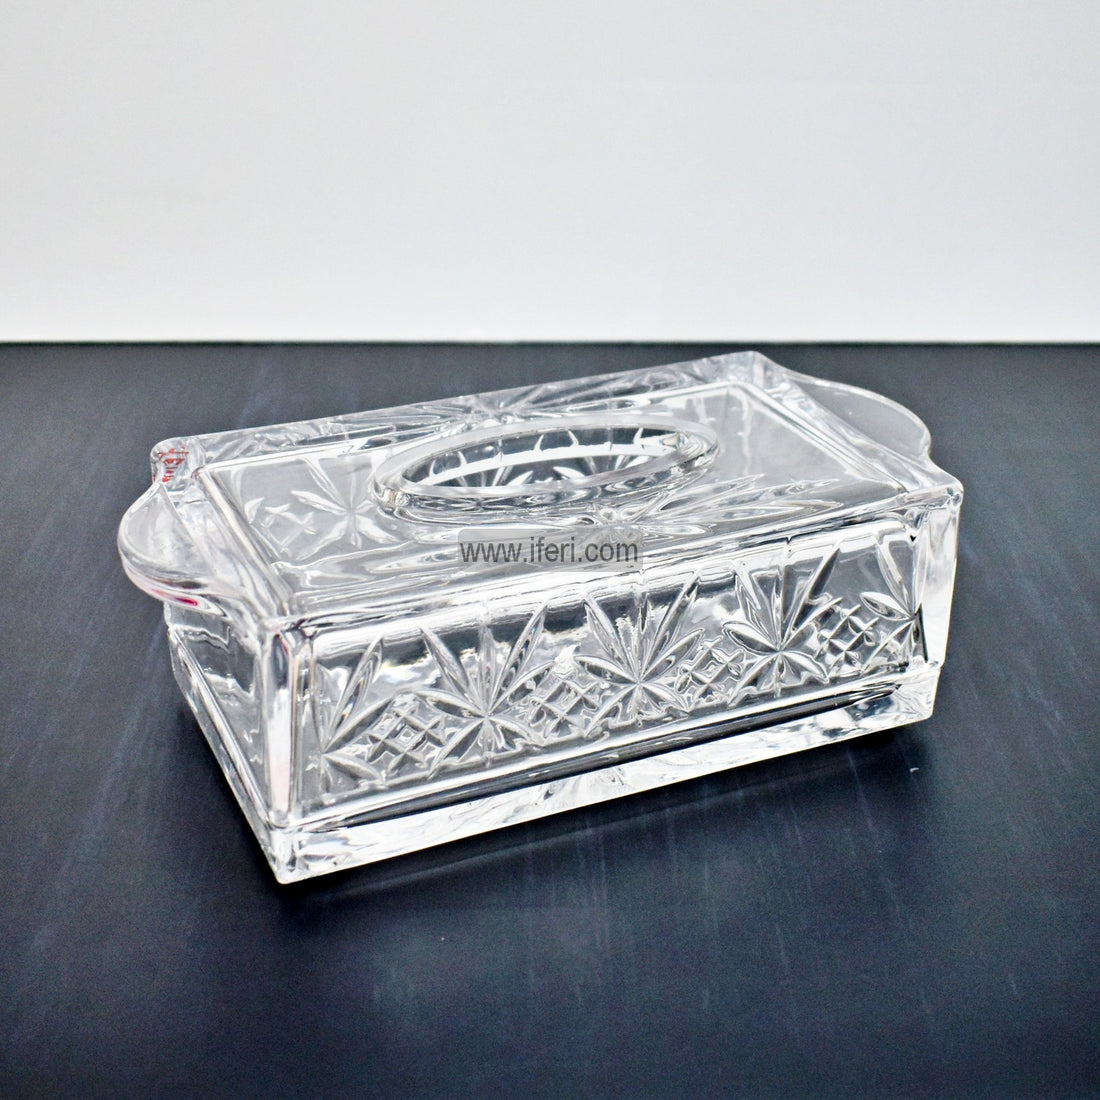 Buy Crystal Glass Tissue Box through online from iferi.com